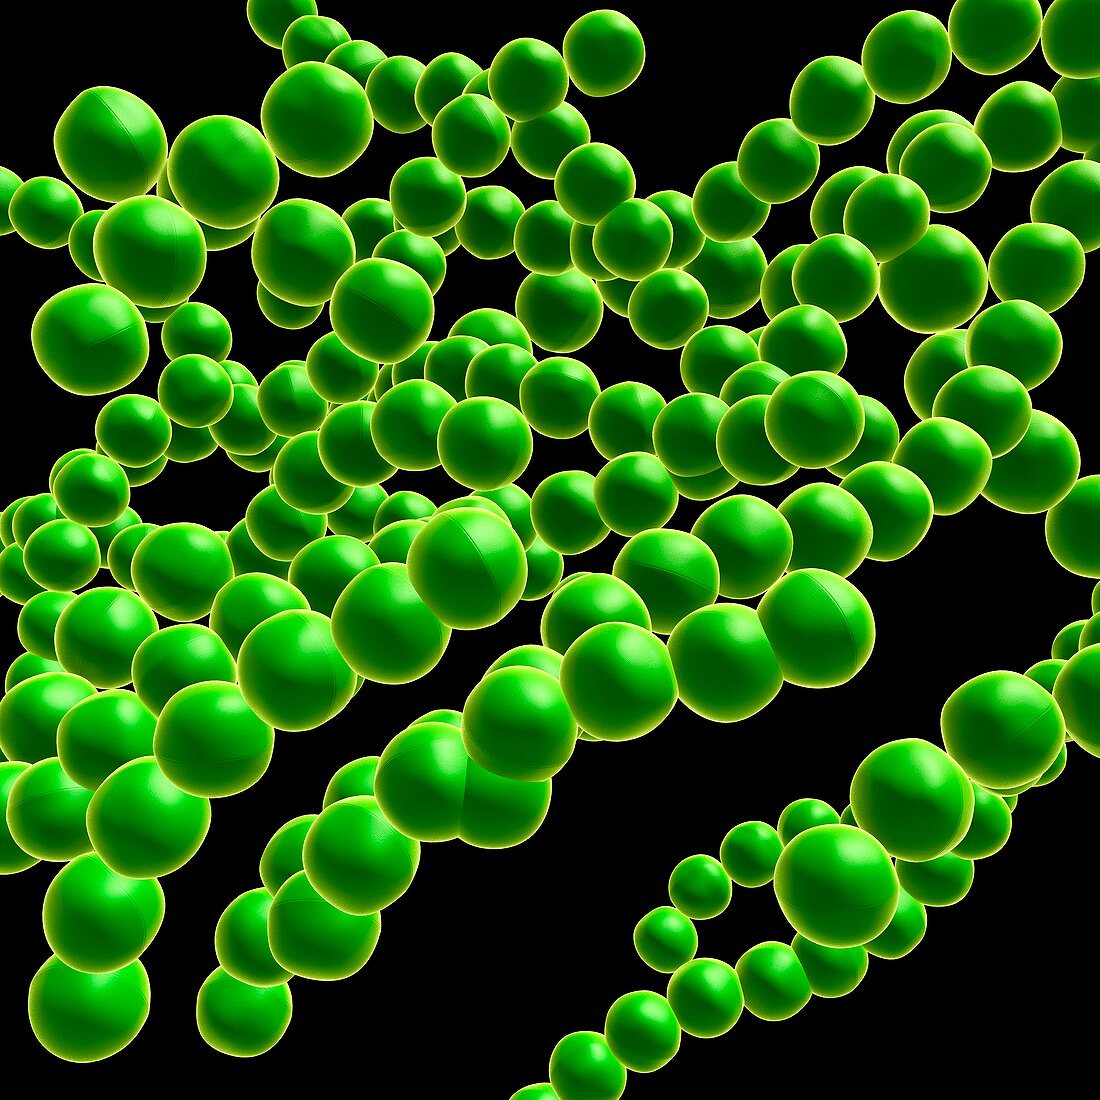 Drug-resistant Streptococcus bacteria, illustration